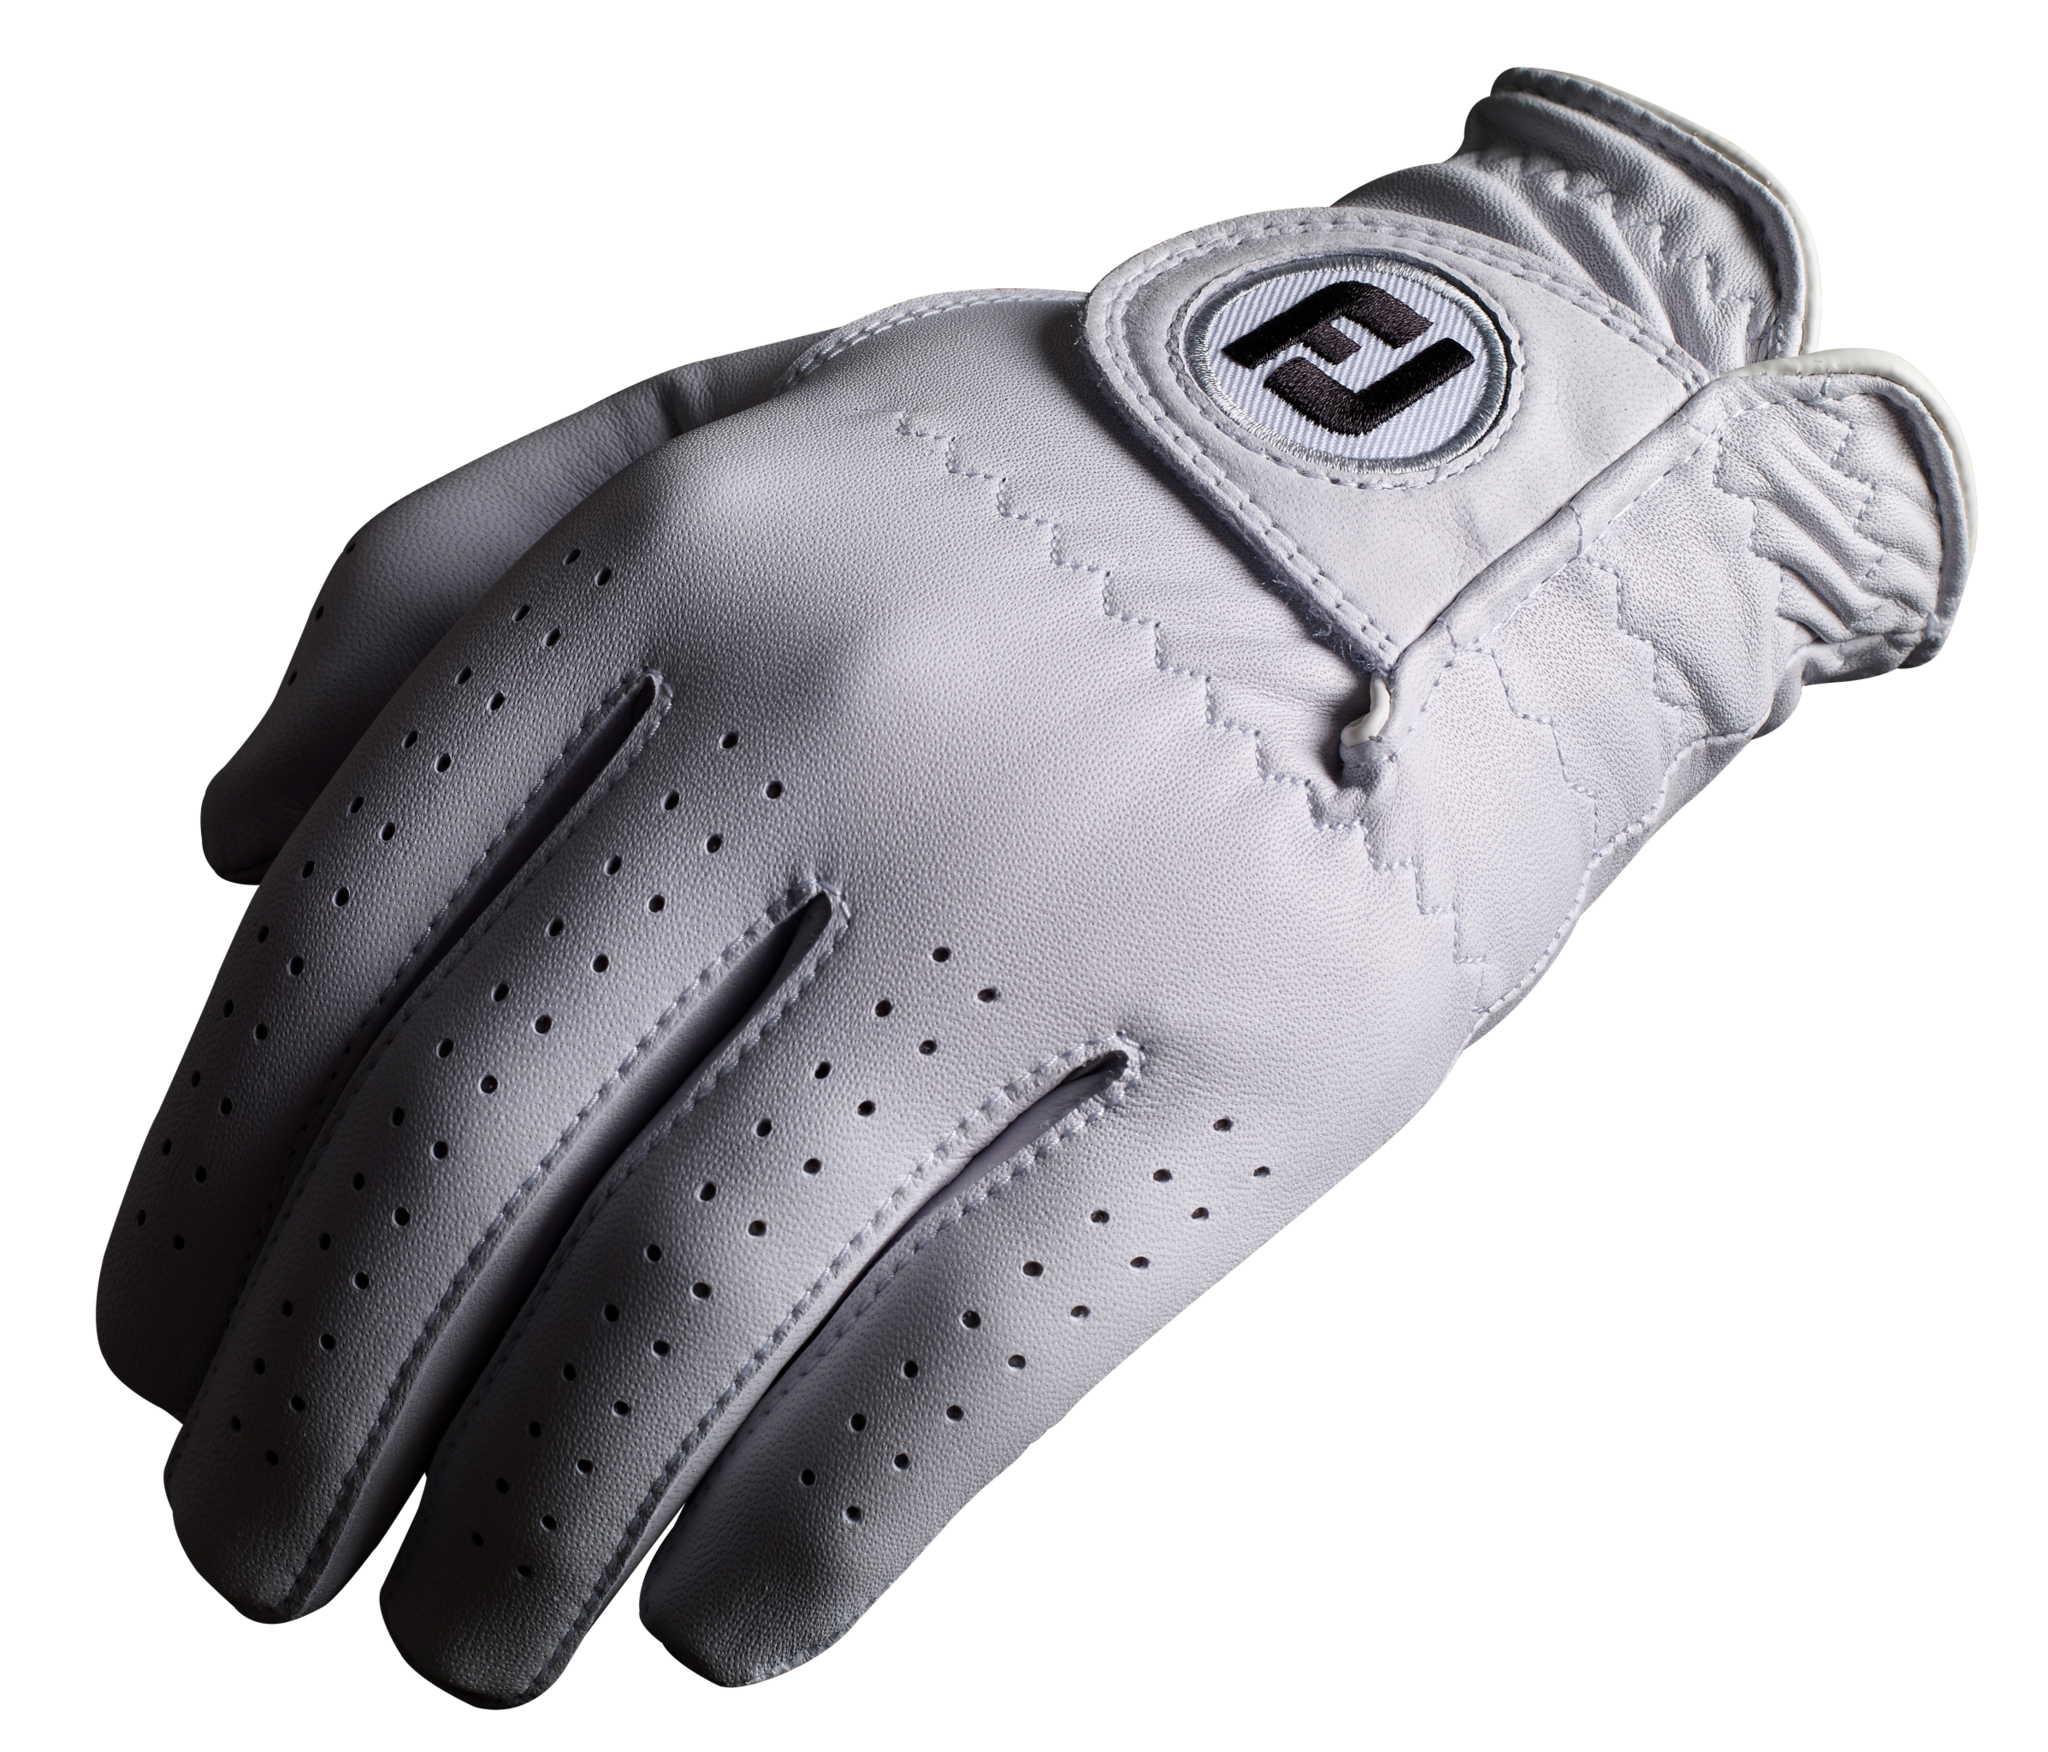 FootJoy Cabrettasof White Golf Glove Left Hand | Evolution Golf  | FootJoy | Evolution Golf 